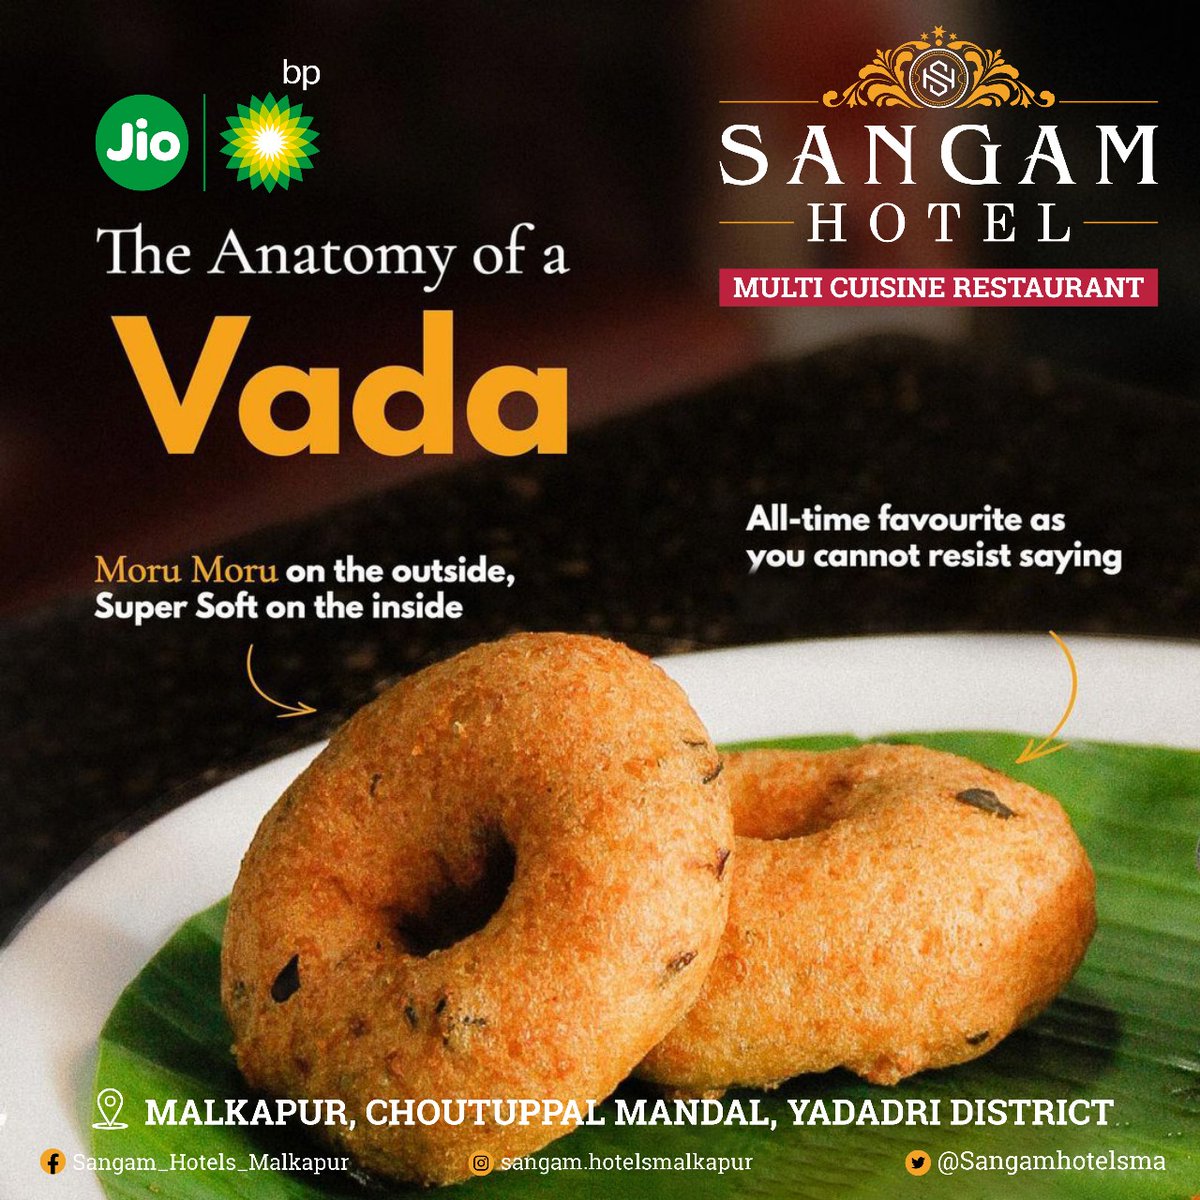 The Anatomy of a Vada!! @Sangamhotelsma

#vada #foodie #food #southindianfood #foodphotography #foodporn #indianfood #foodblogger #breakfast #idli #instafood #dosa #foodstagram #homemade #foodlover #sambar #chutney #sambhar #southindian #vadapav #yummy